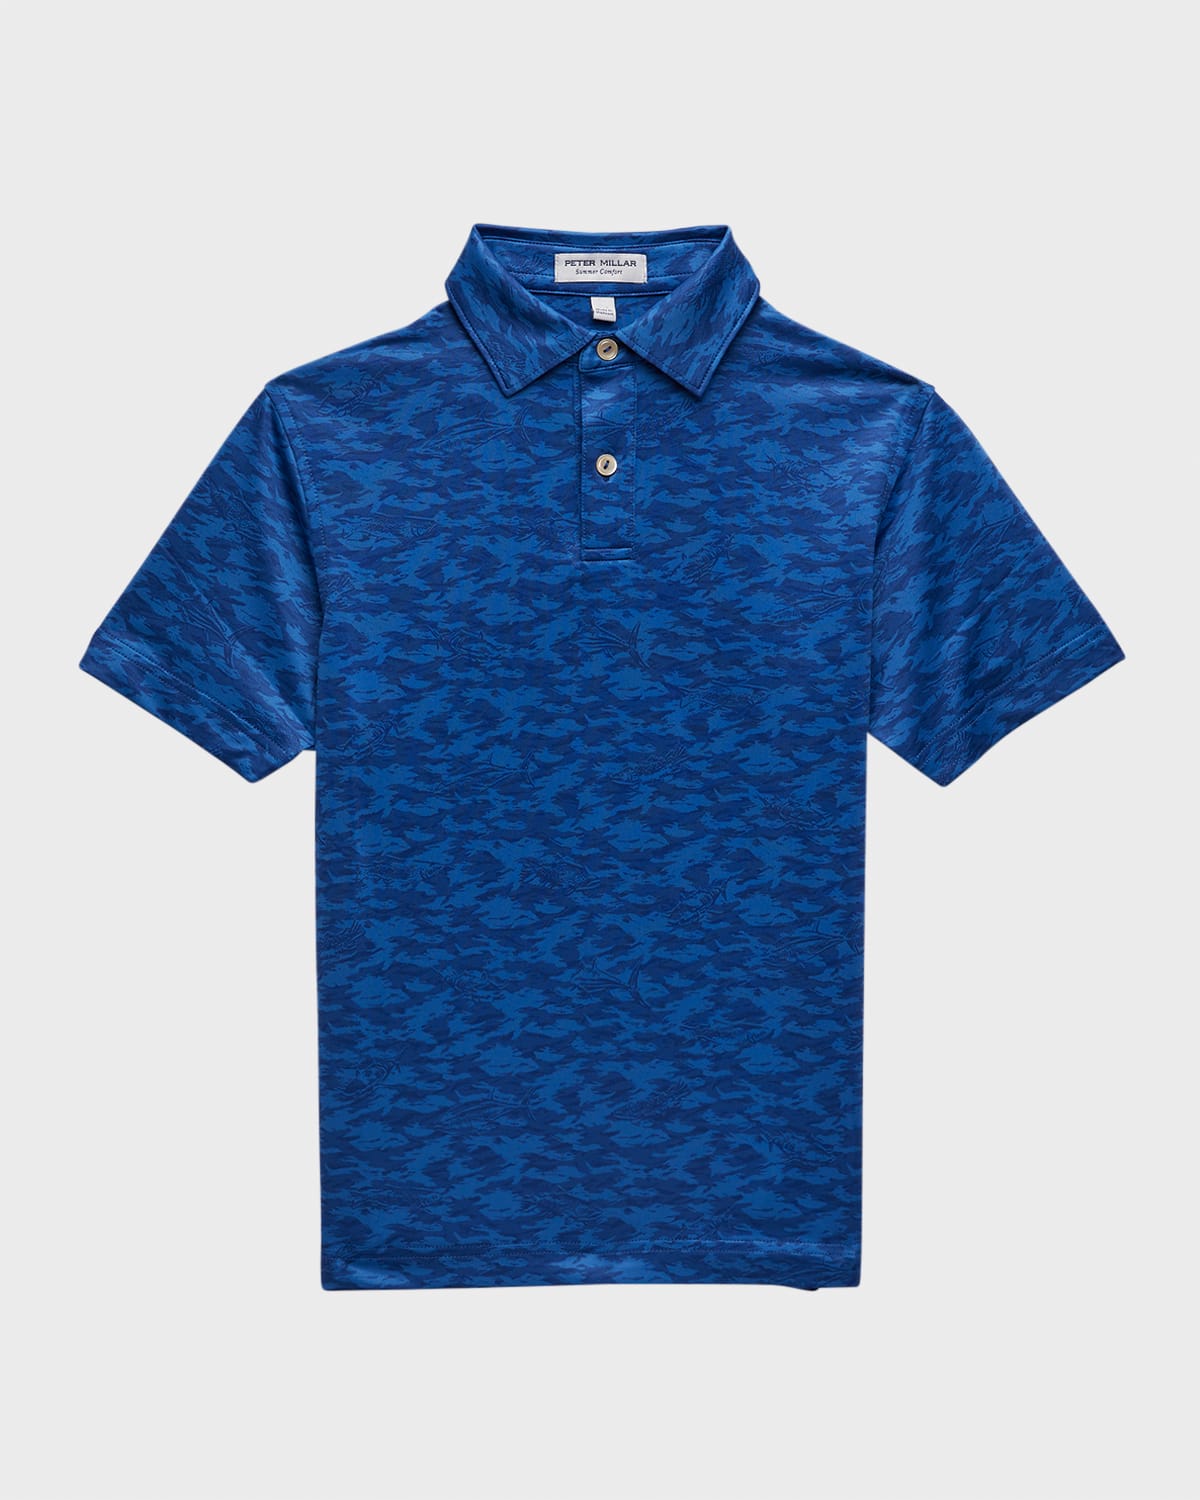 Boy's Fish Camouflage-Print Performance Jersey Polo Shirt, Size XS-XL